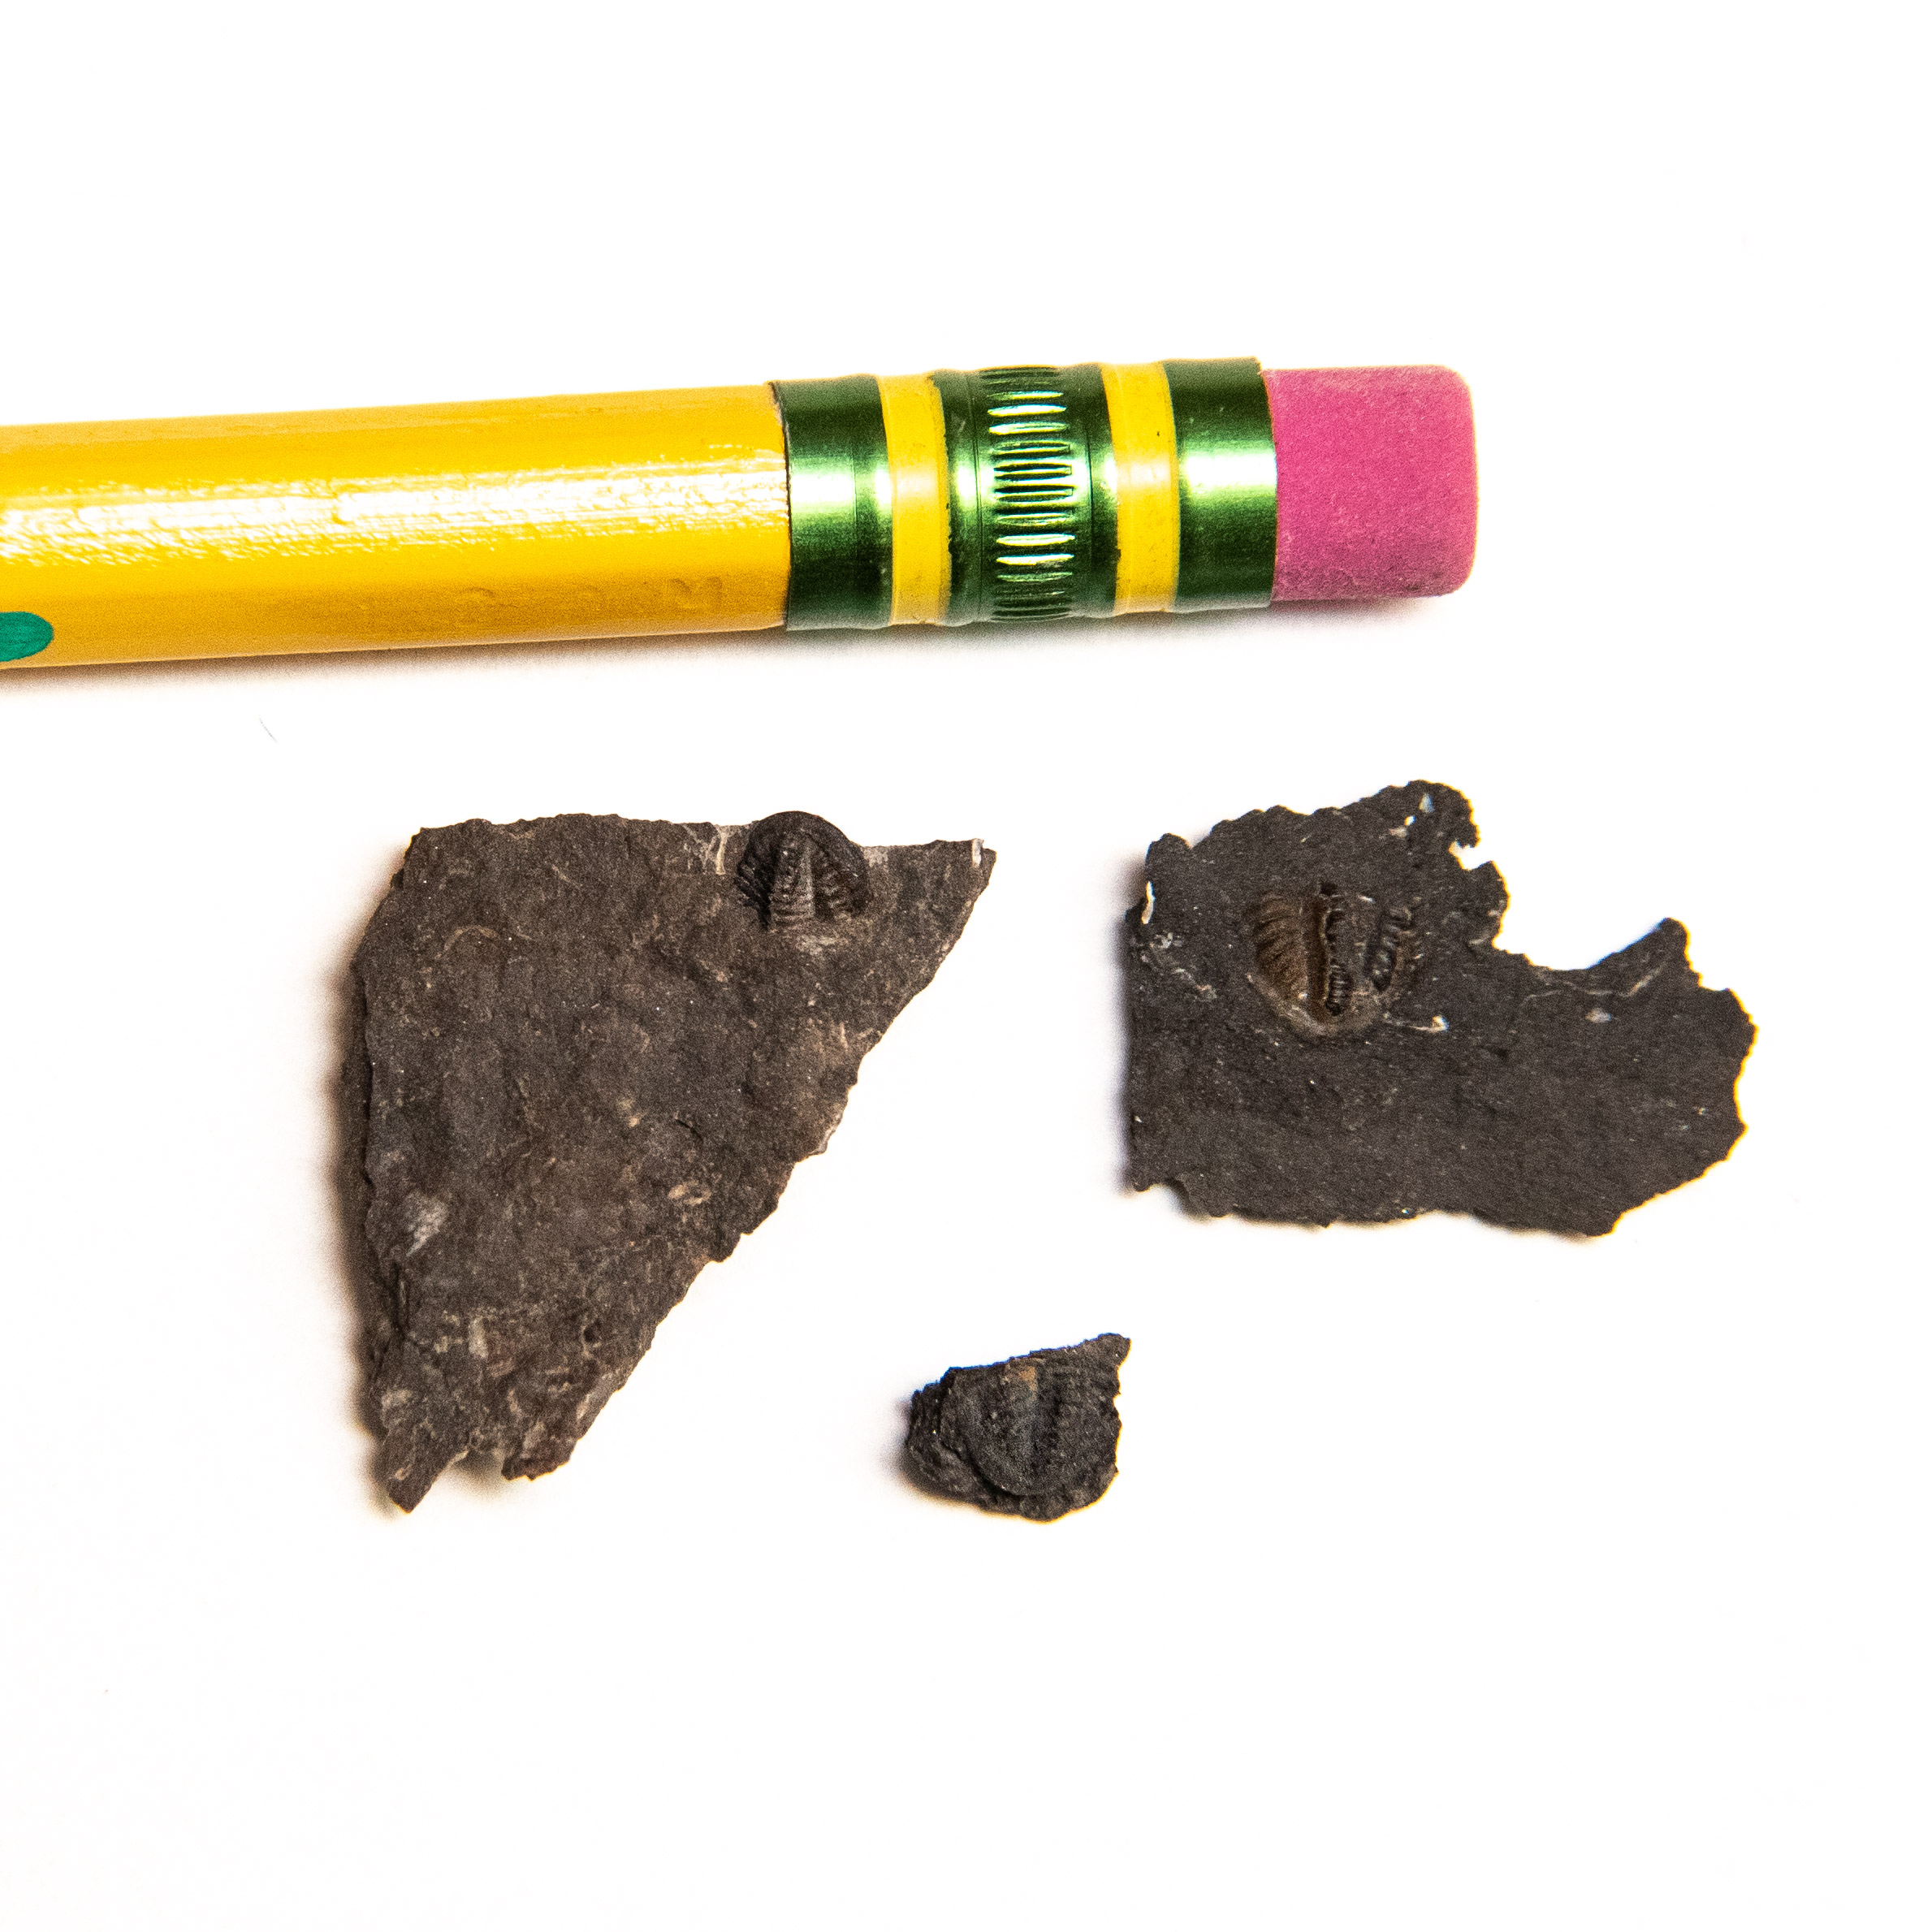 Late Pennsylvanian Trilobites next to a number 2 pencil eraser.